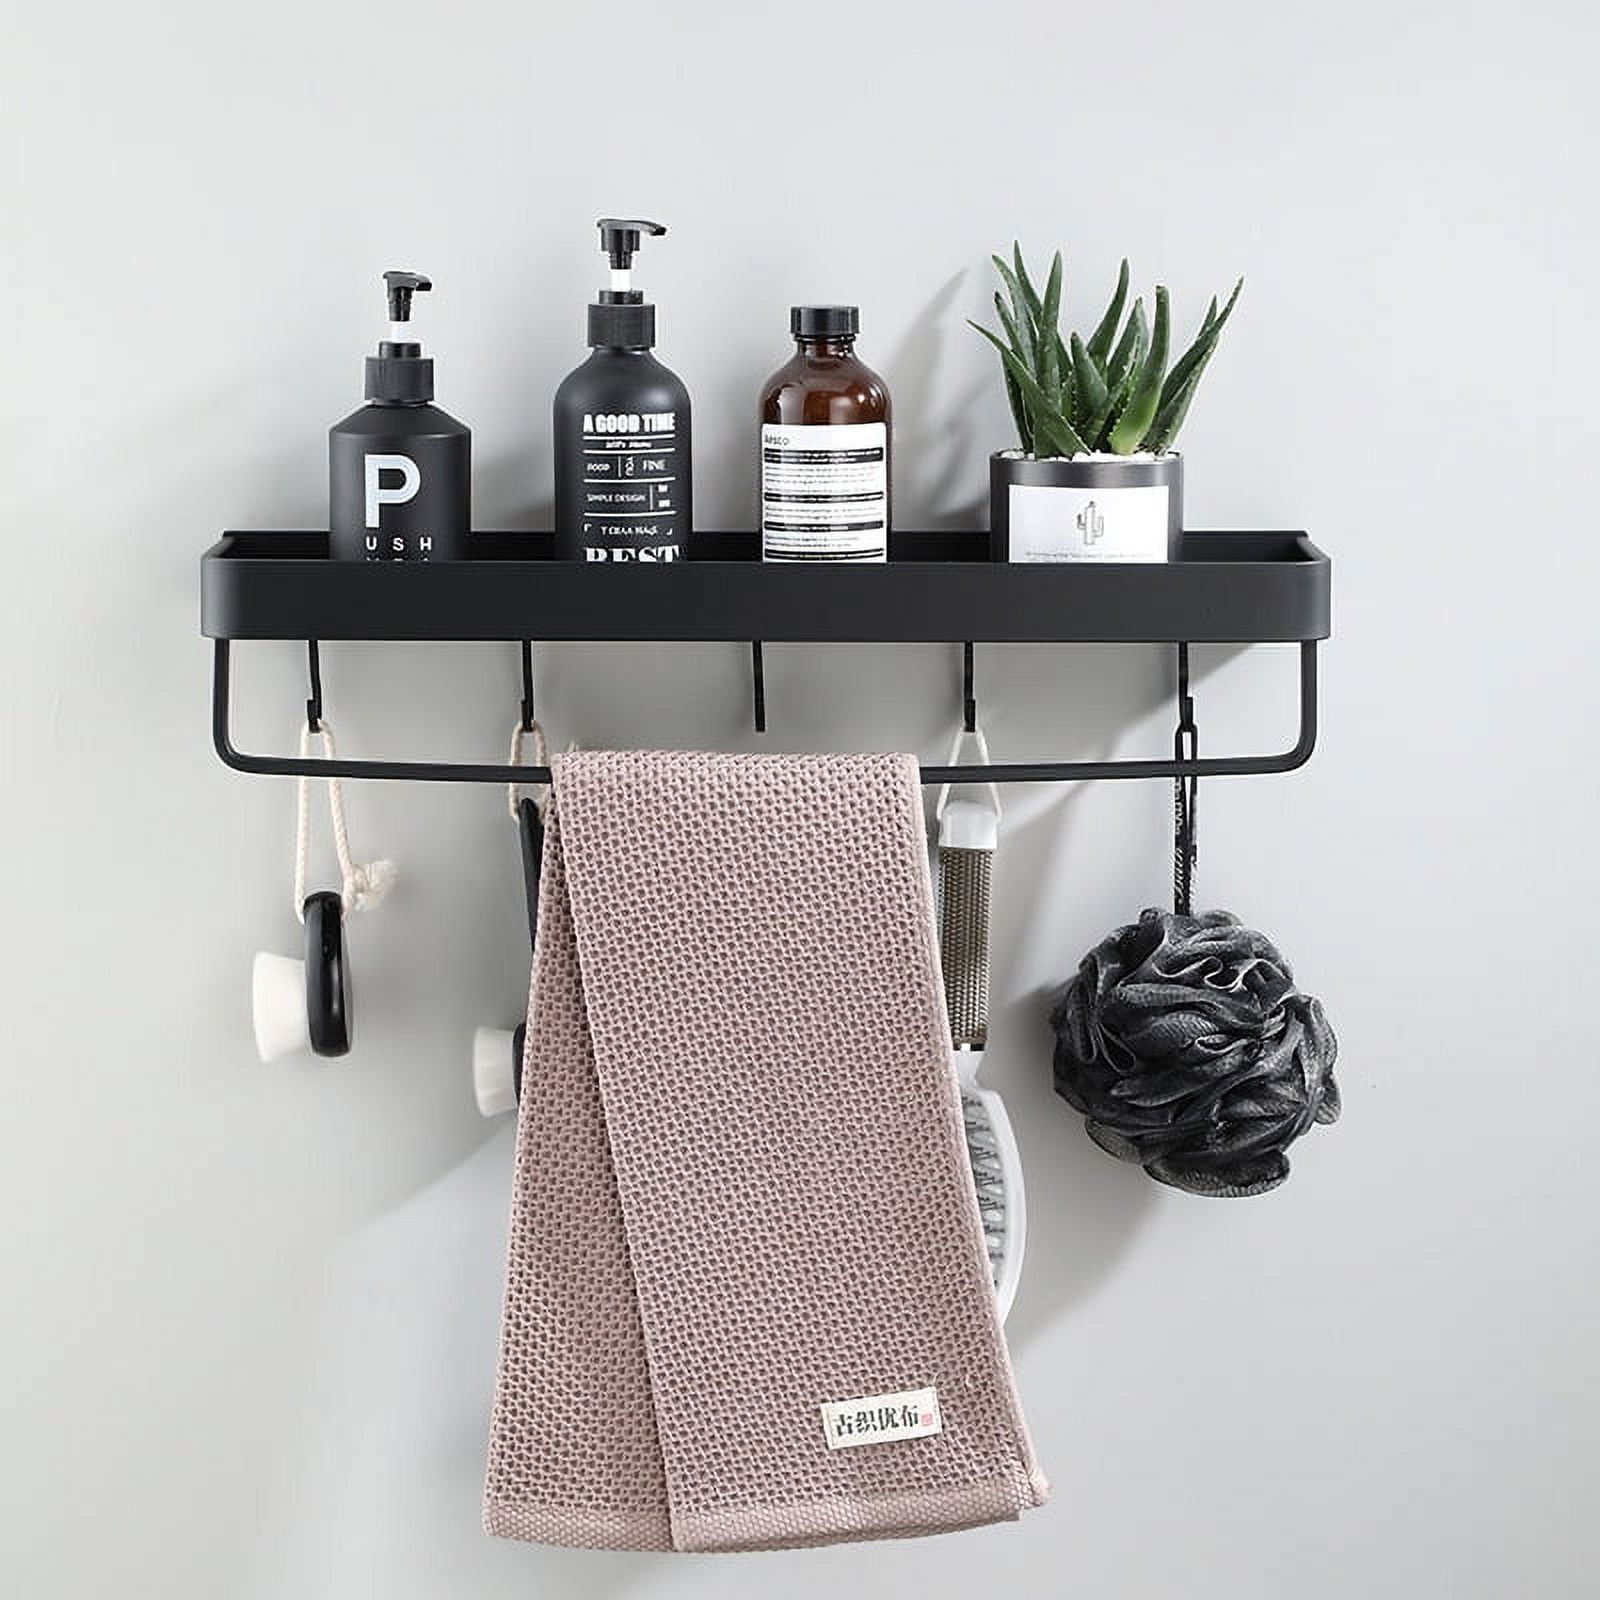 Moforoco Shower Caddy Shelf Organizer Rack, Self Adhesive Black Bathroom  Shelves Basket, Home Farmhouse Wall Shower Inside Organization and Storage